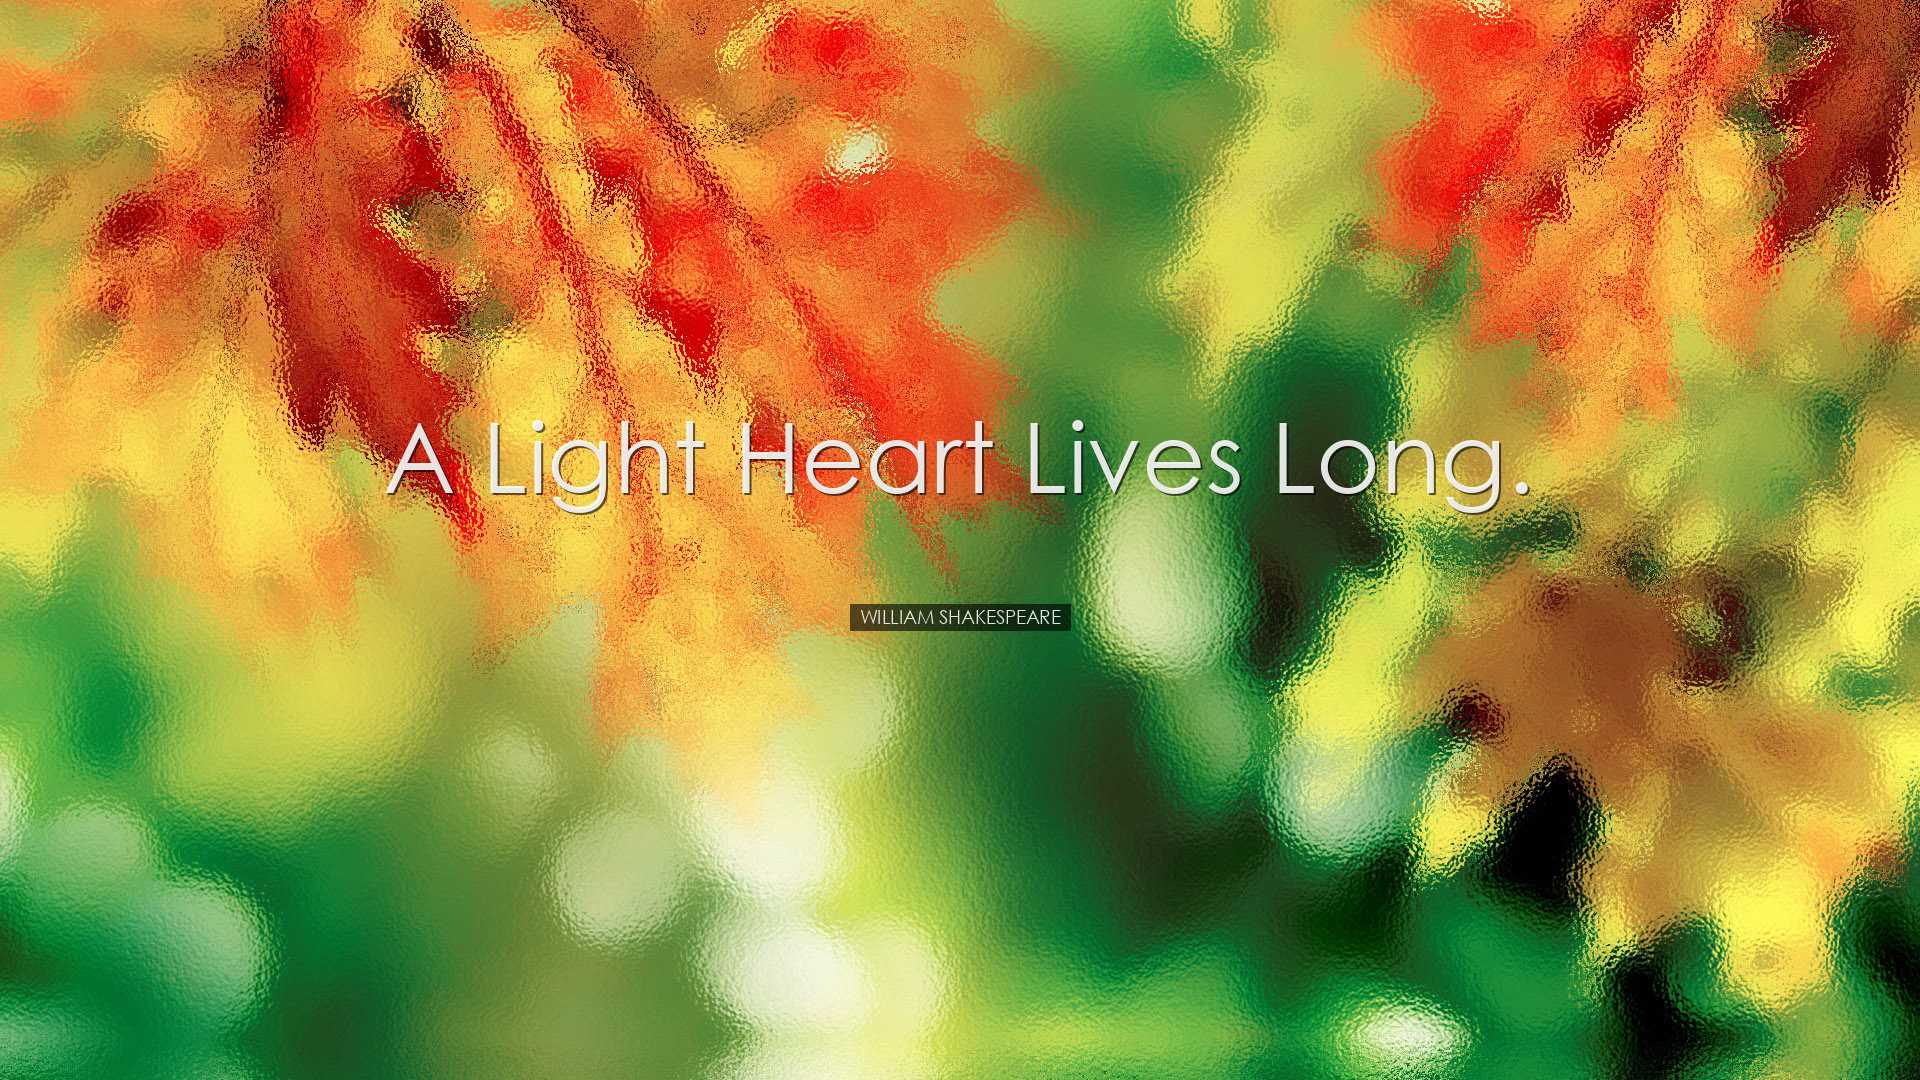 A light heart lives long. - William Shakespeare